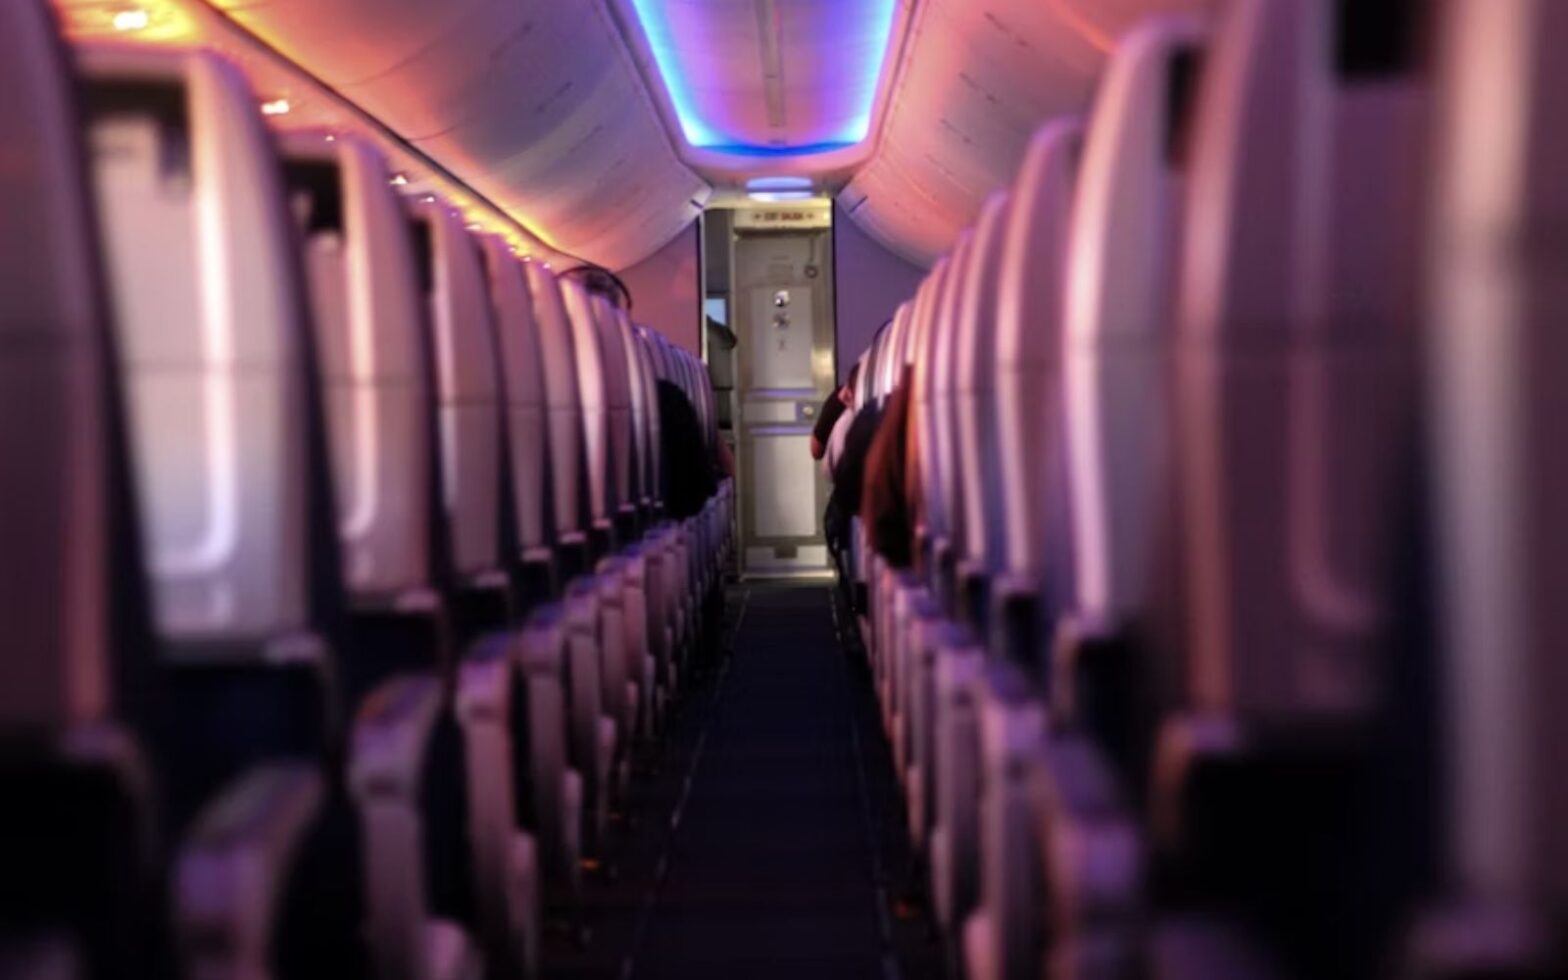 aisle view inside airplane